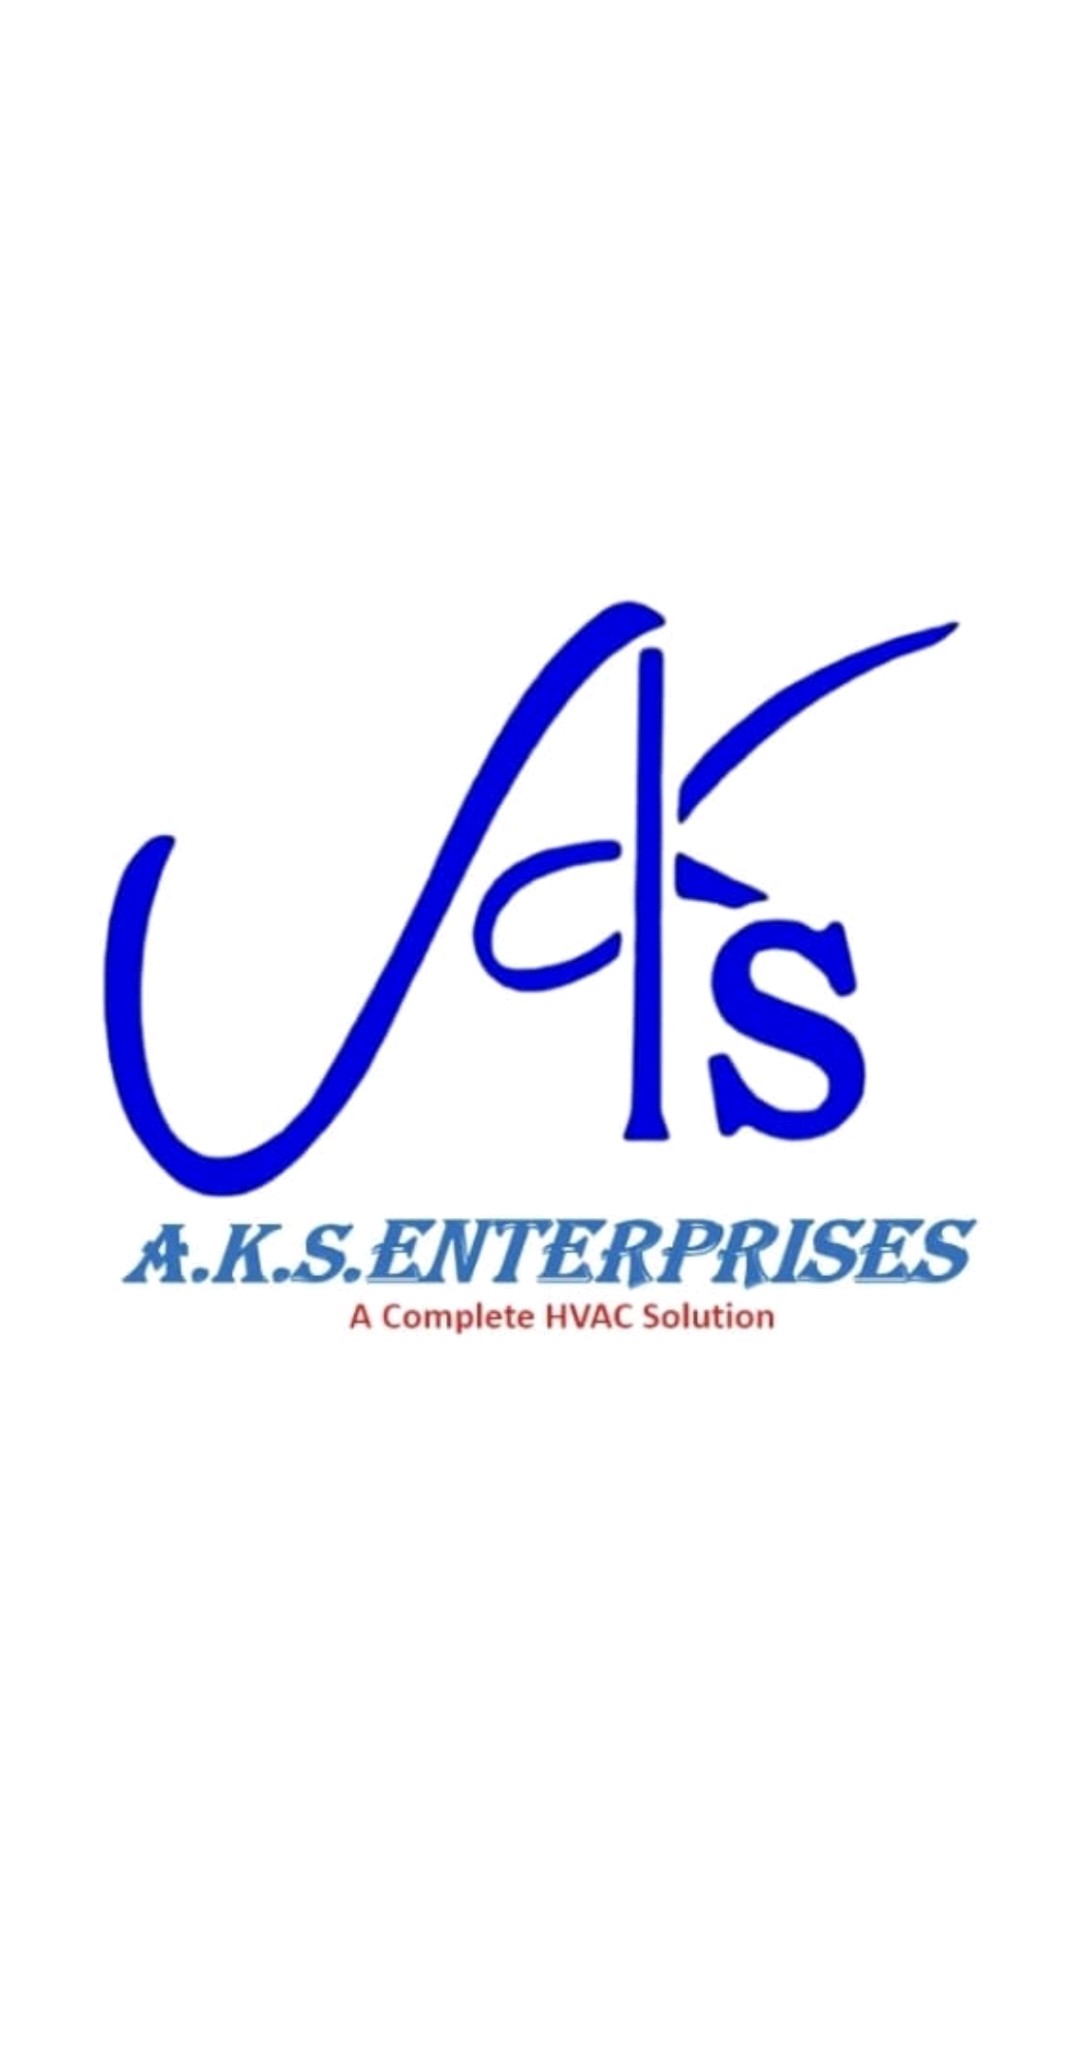 A.K.S.ENTERPRISES